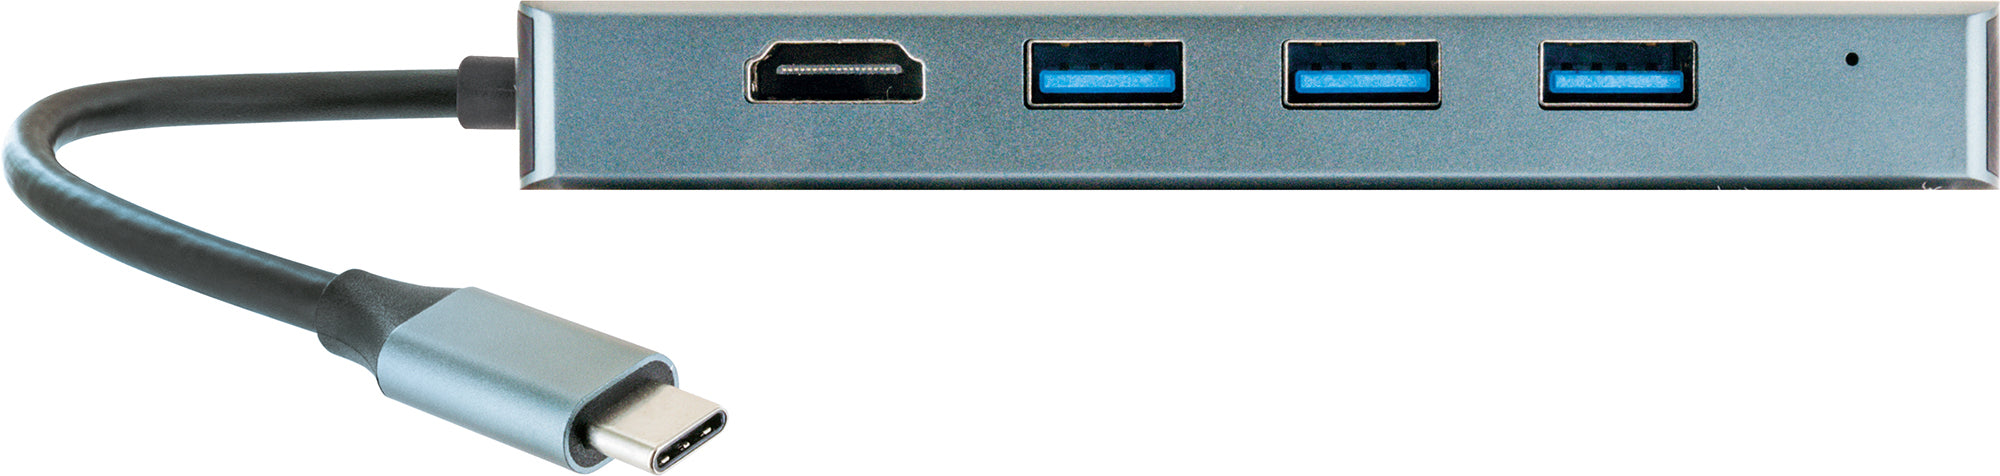 USB Type C Multiport Adapter